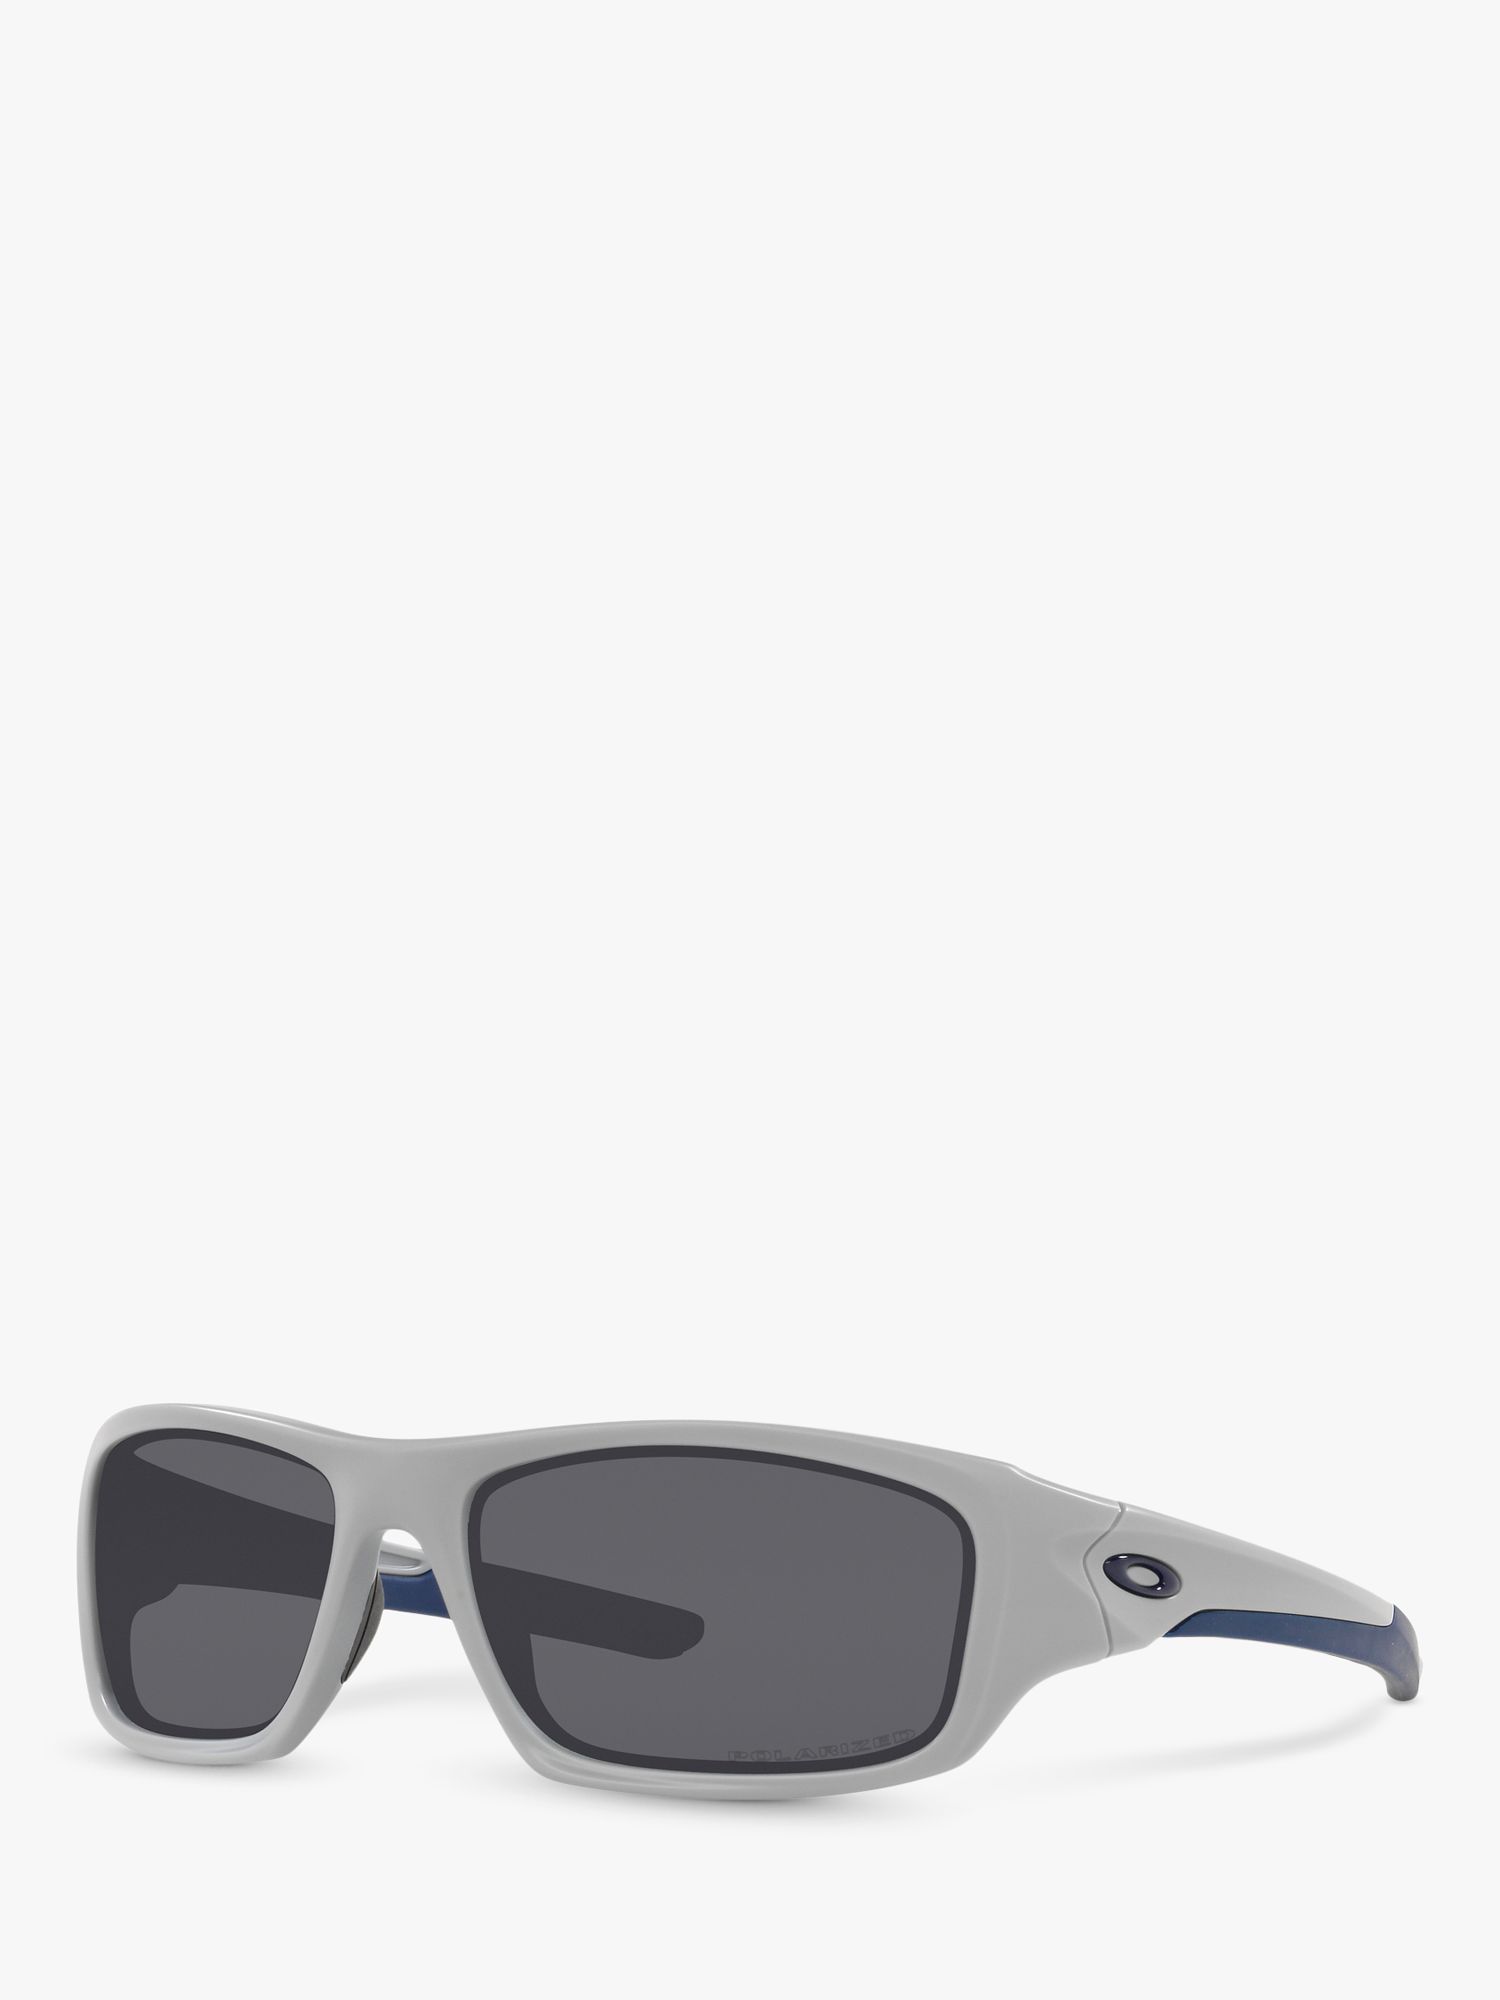 Oakley OO9236 Men's Valve Polarised Rectangular Sunglasses, Matte Fog/Grey